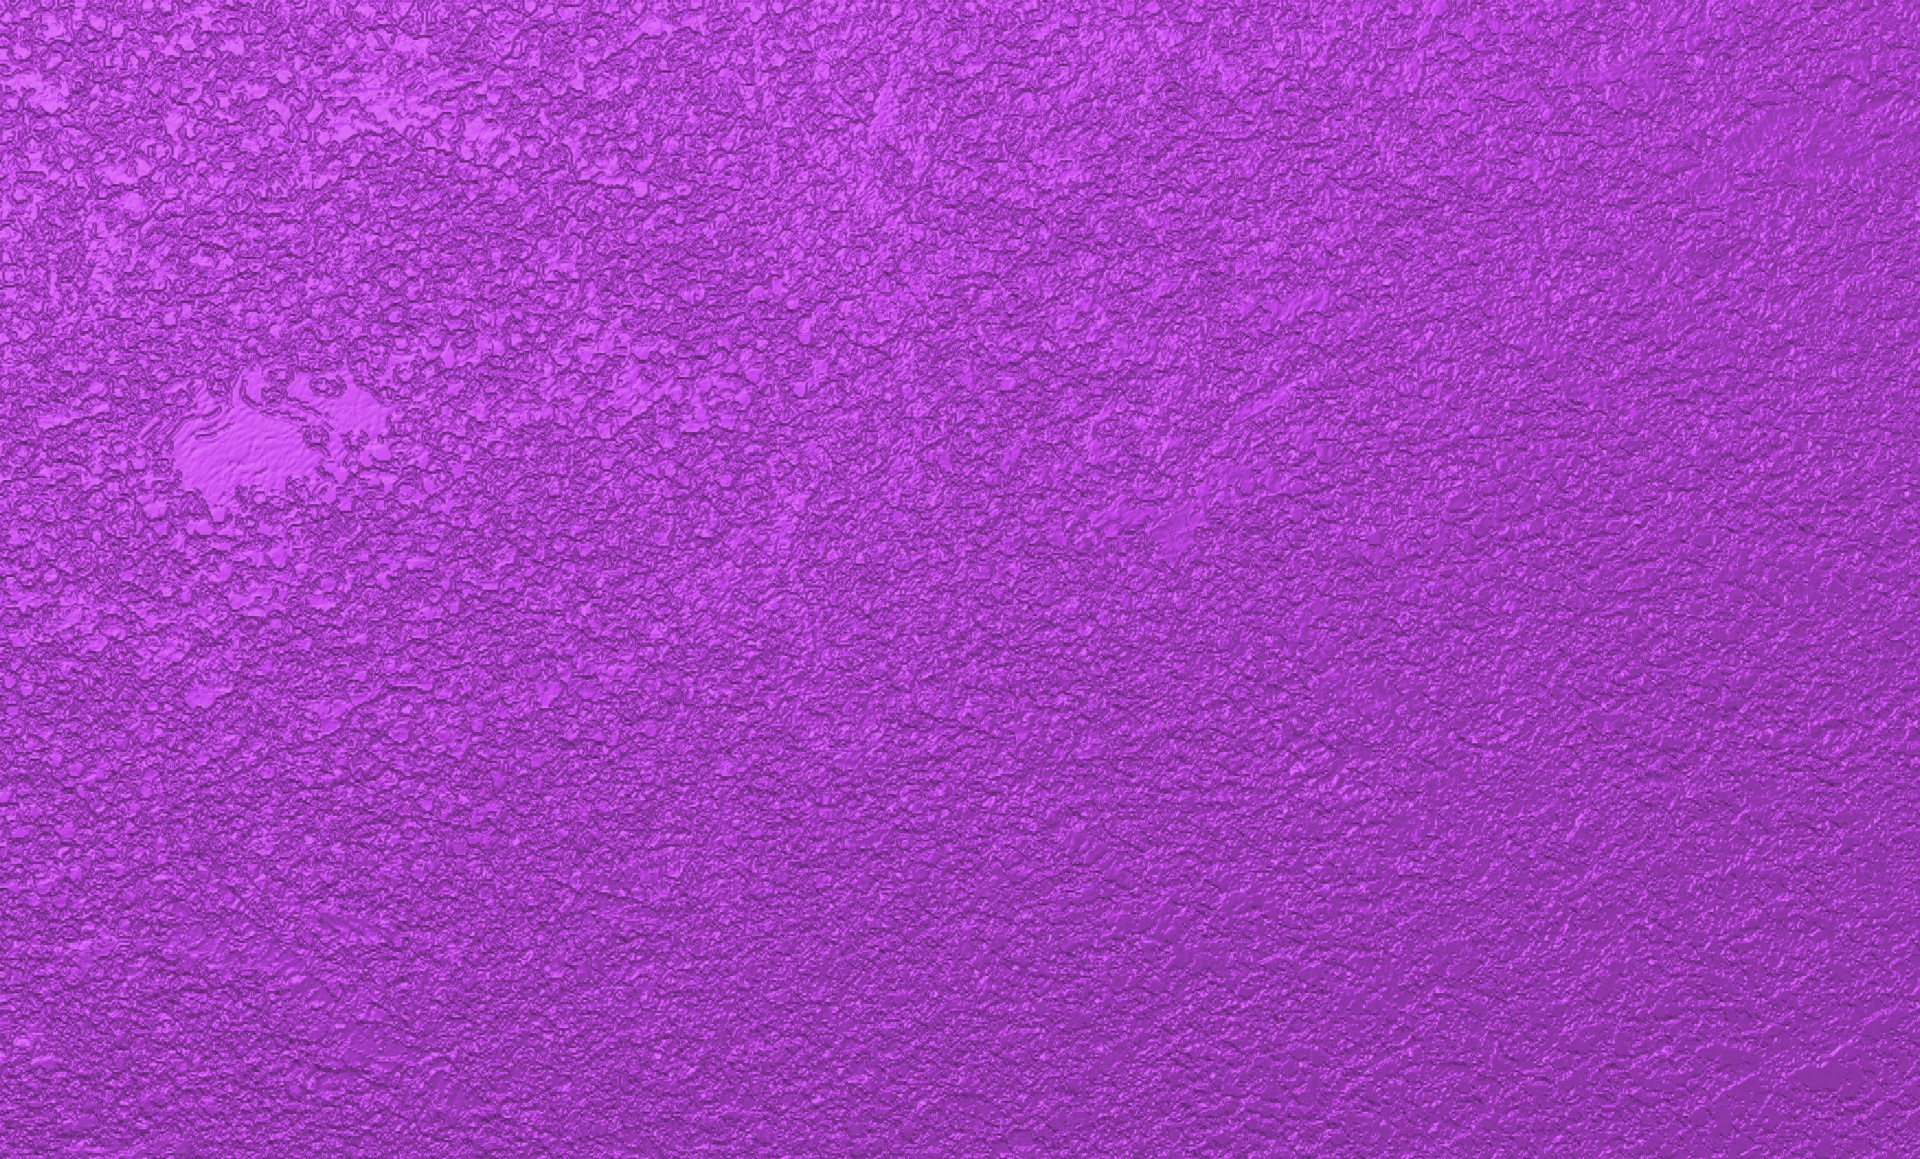 Rough Textured Purple Background Free Stock Photo - Public Domain ...